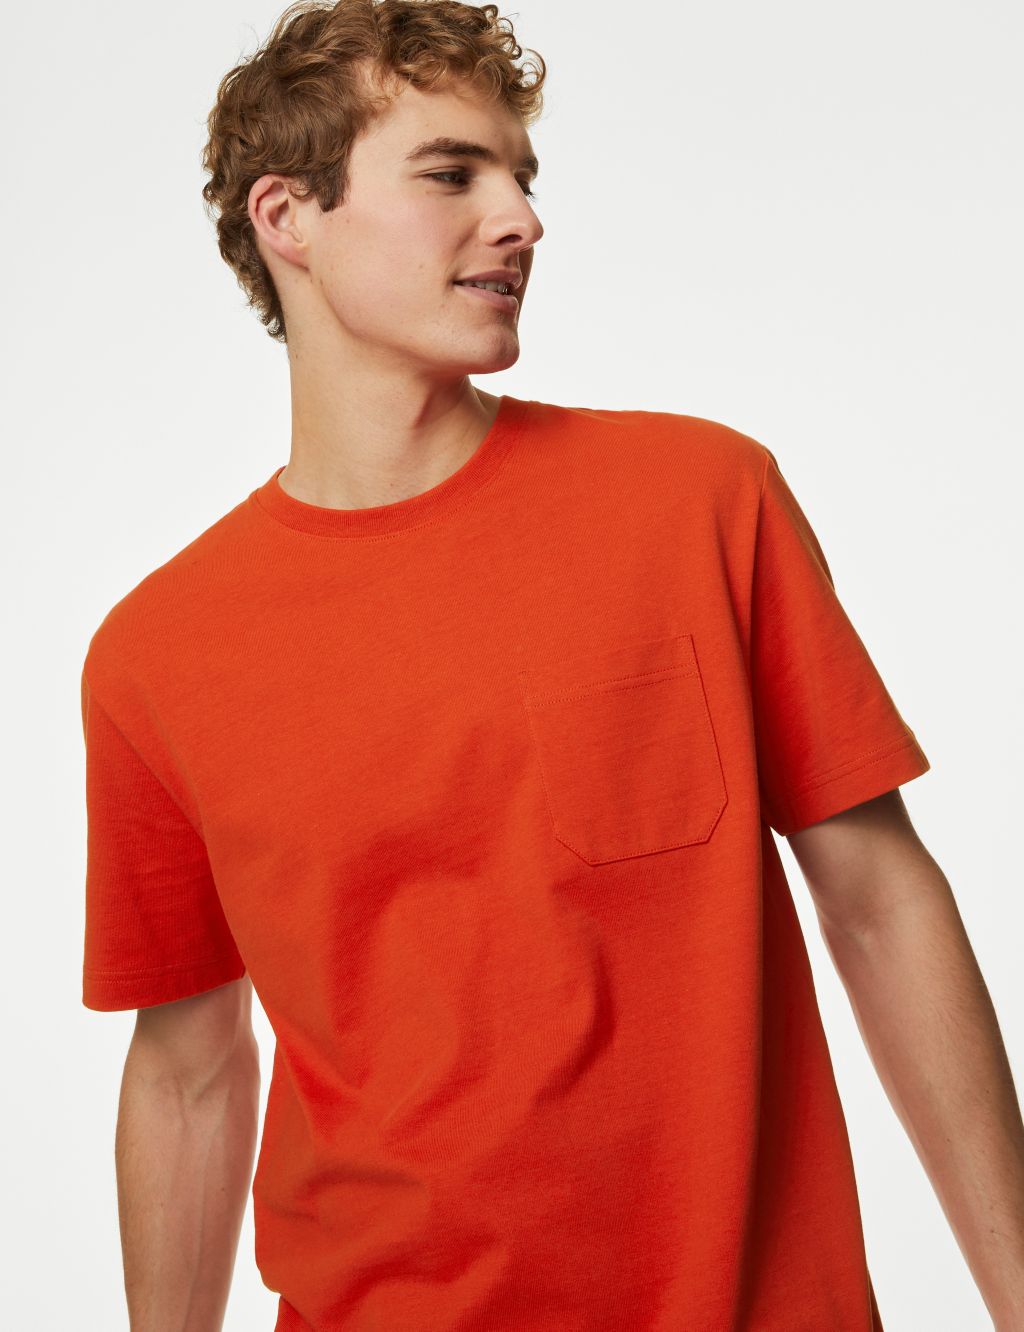 Men’s Orange T-shirts | M&S